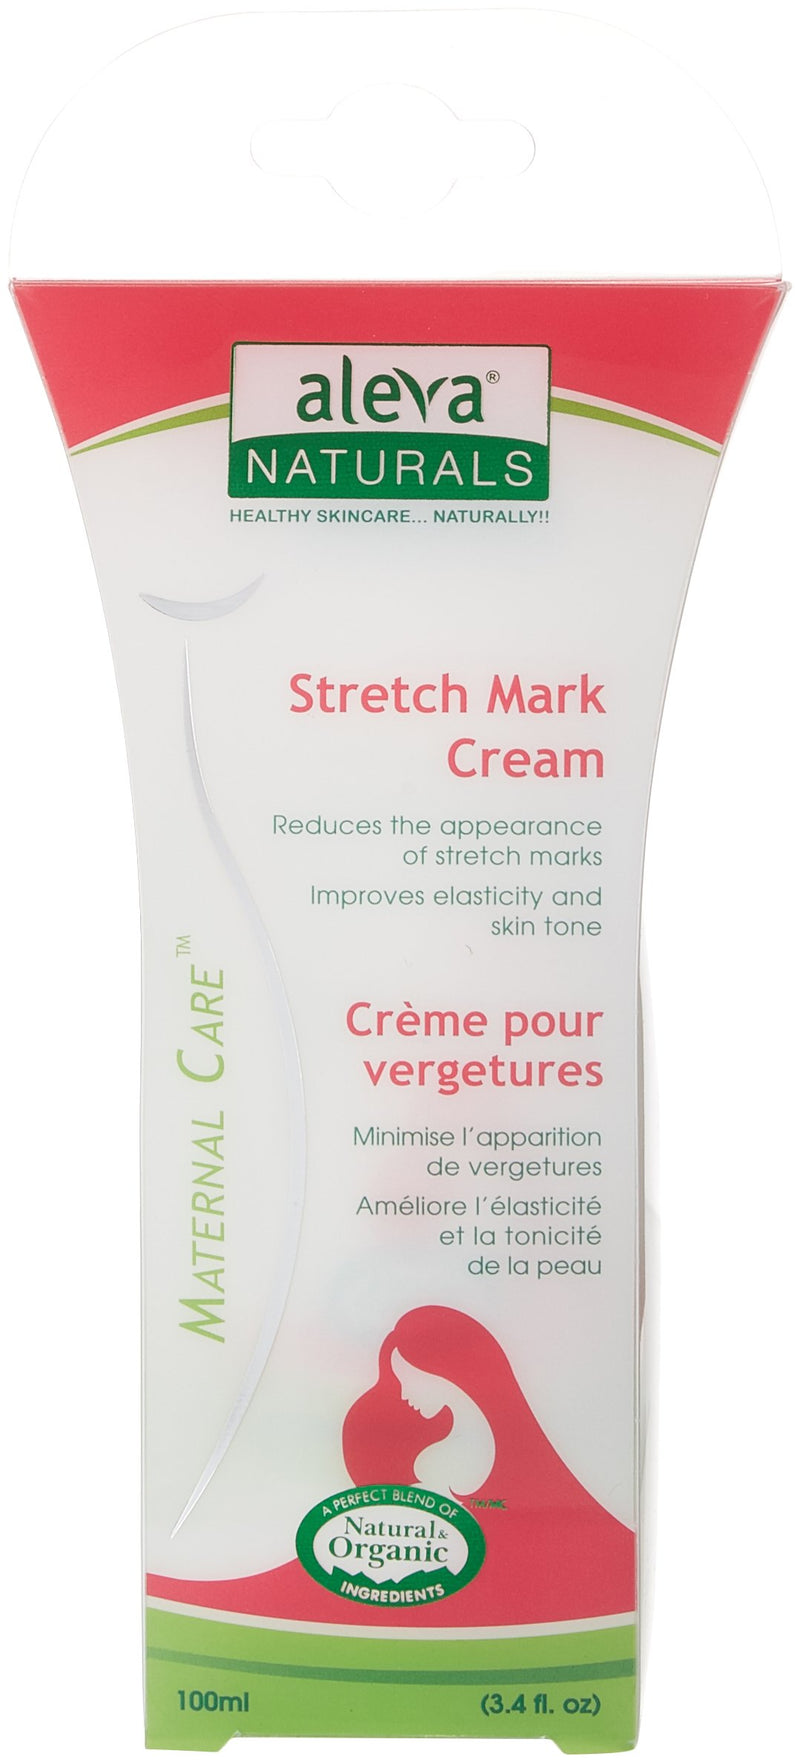 [Australia] - Aleva Naturals Stretch Mark Cream, 3.4oz. 